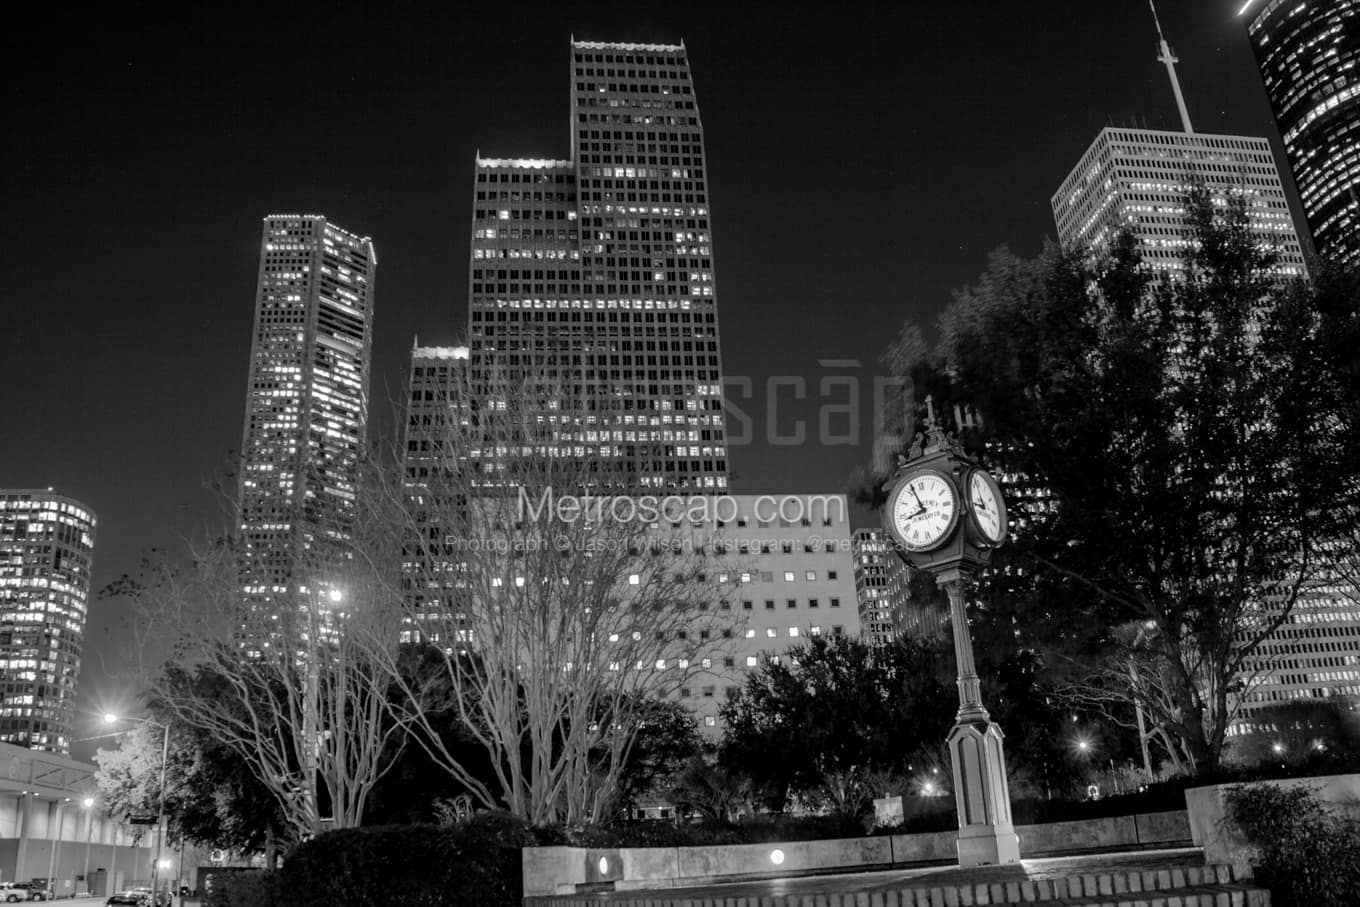 Black & White Houston Architecture Pictures